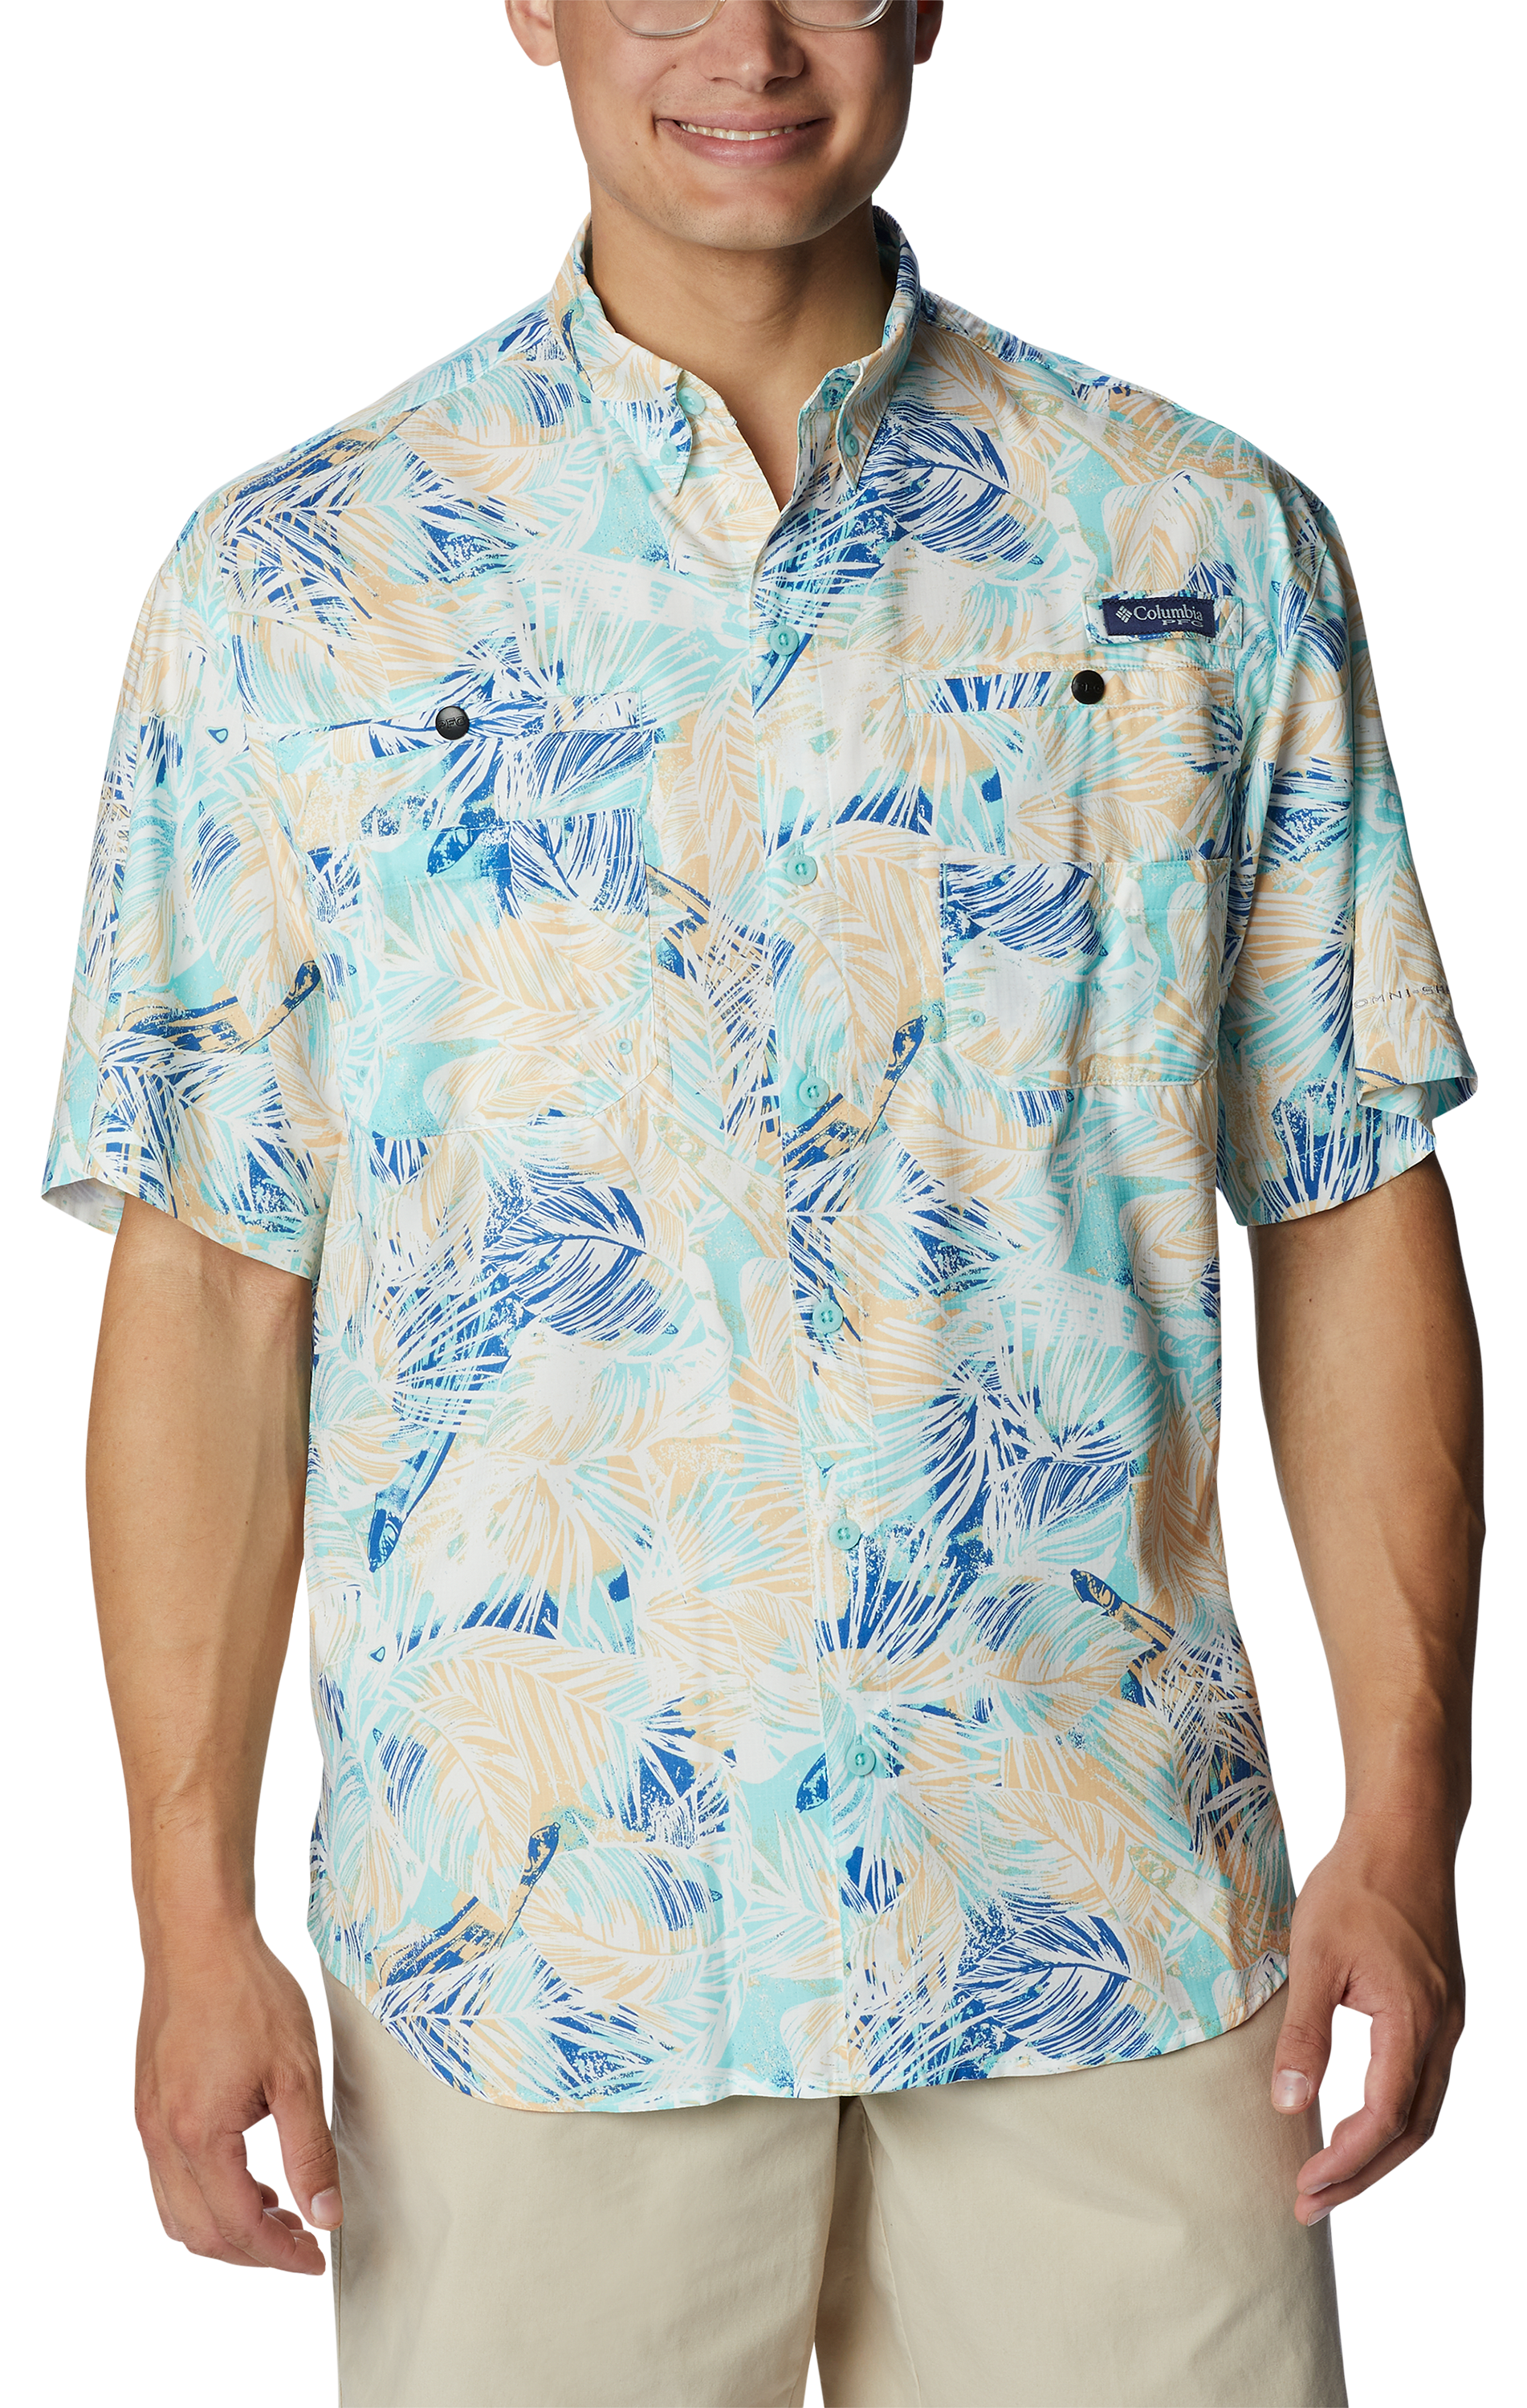 Columbia Sportswear - Fishing Shirt - Tamiami - Primary Logo - Navy Large